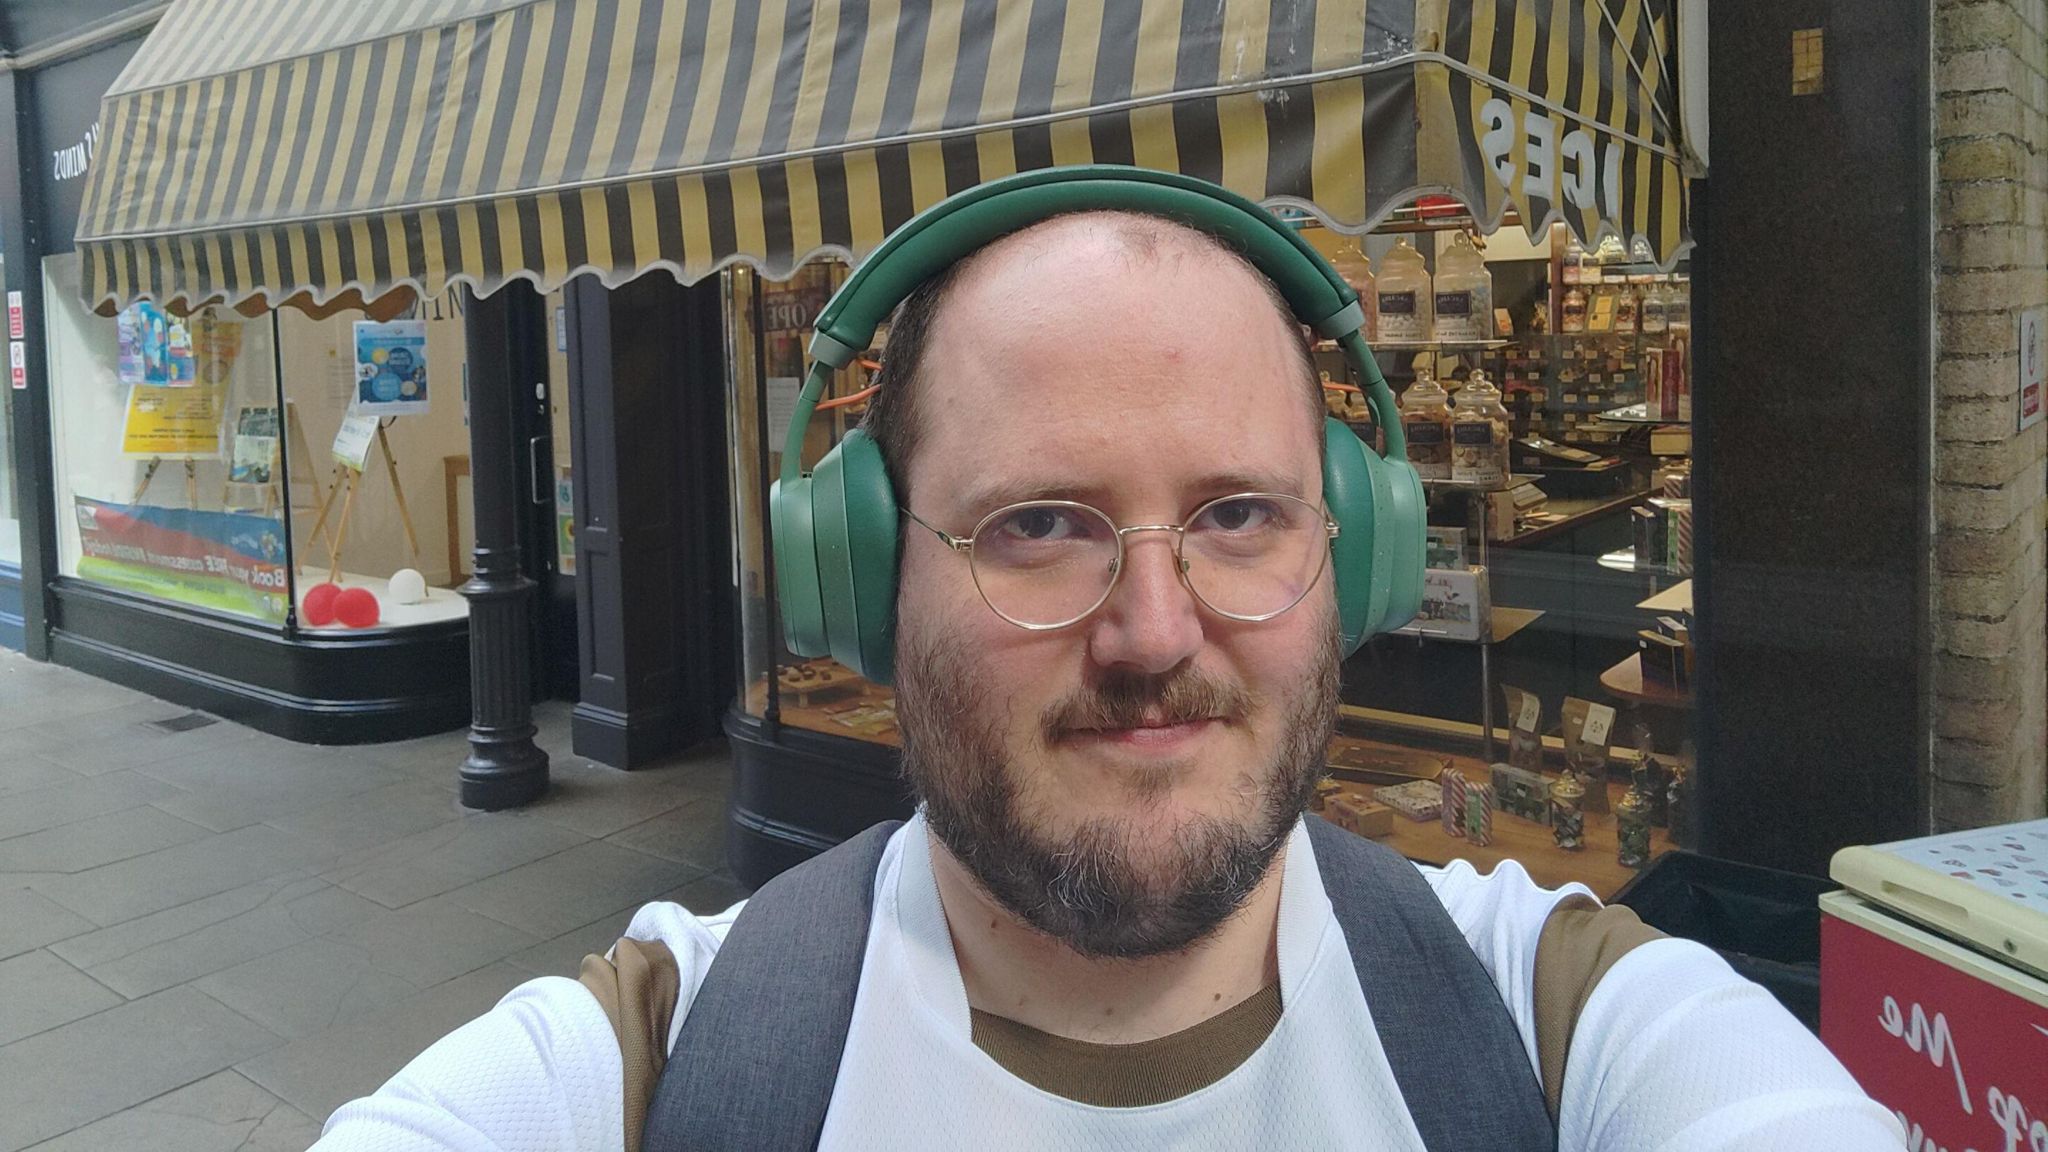 Alex Levene wearing headphones in front of a sweet shop